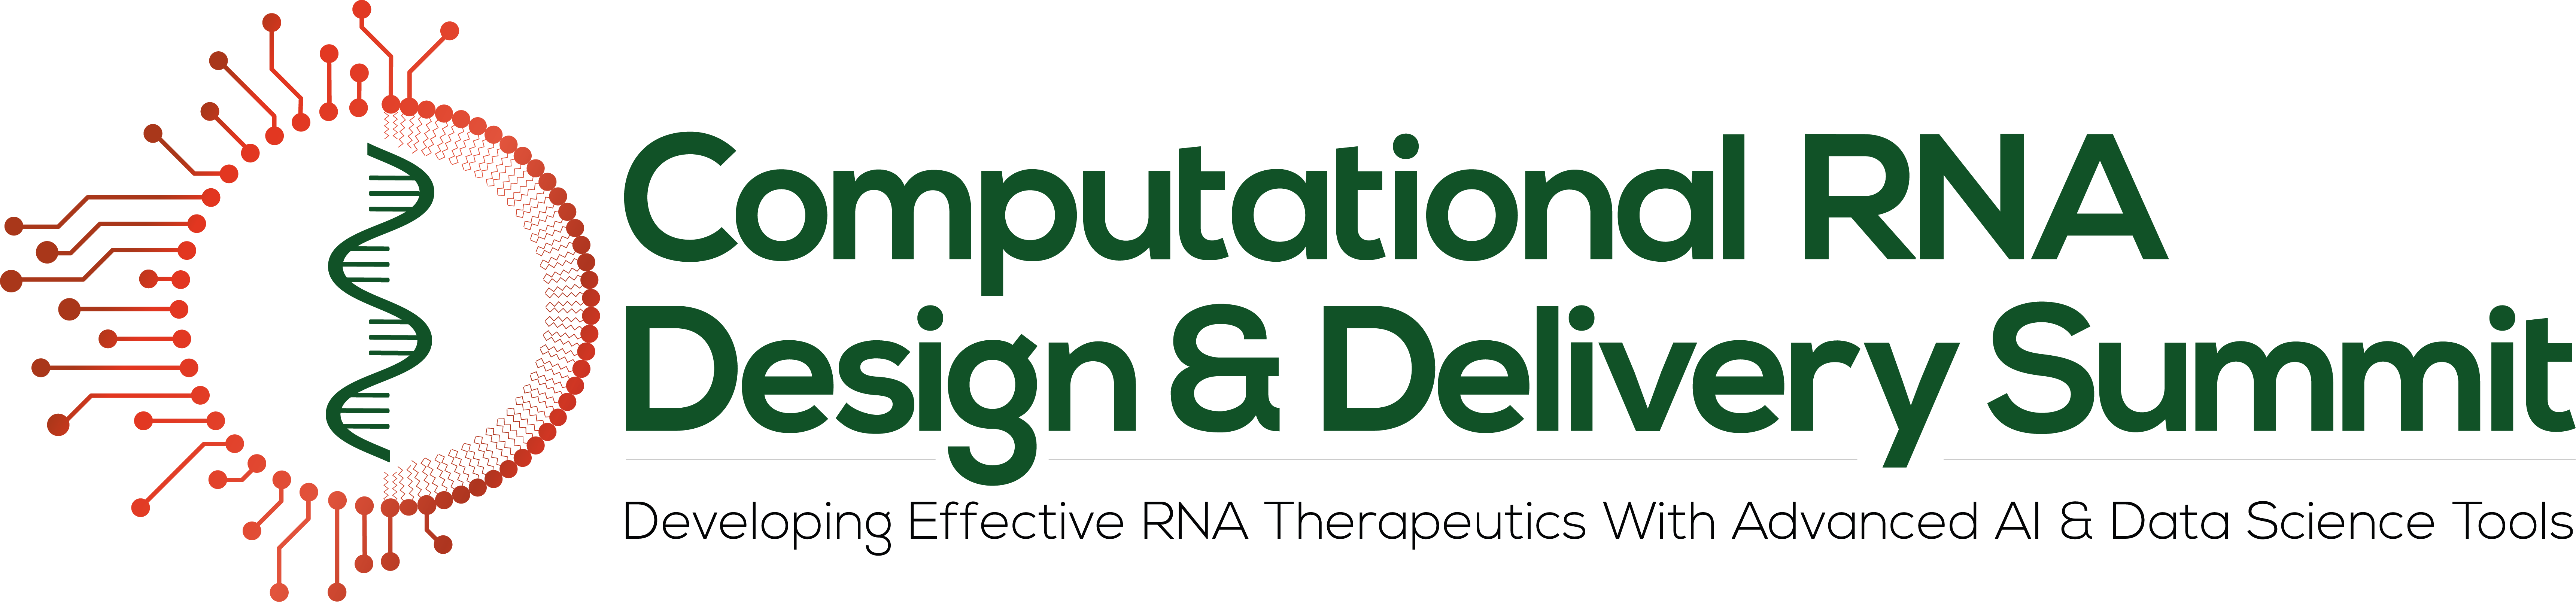 Computational RNA Design & Delivery Summit Logo